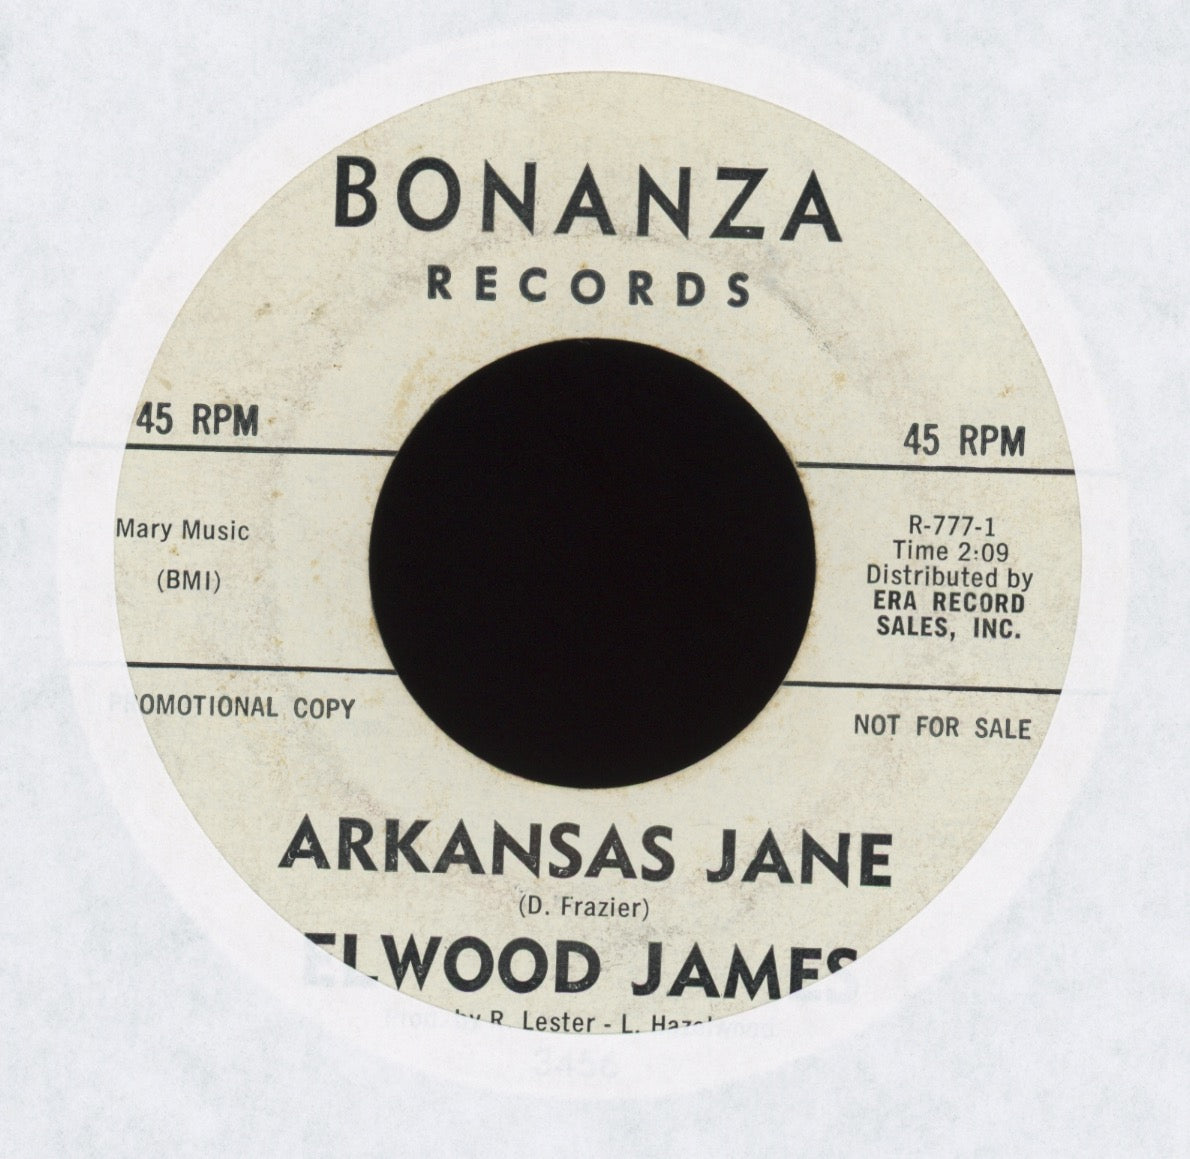 Elwood James - Arkansas Jane on Bonanza Promo